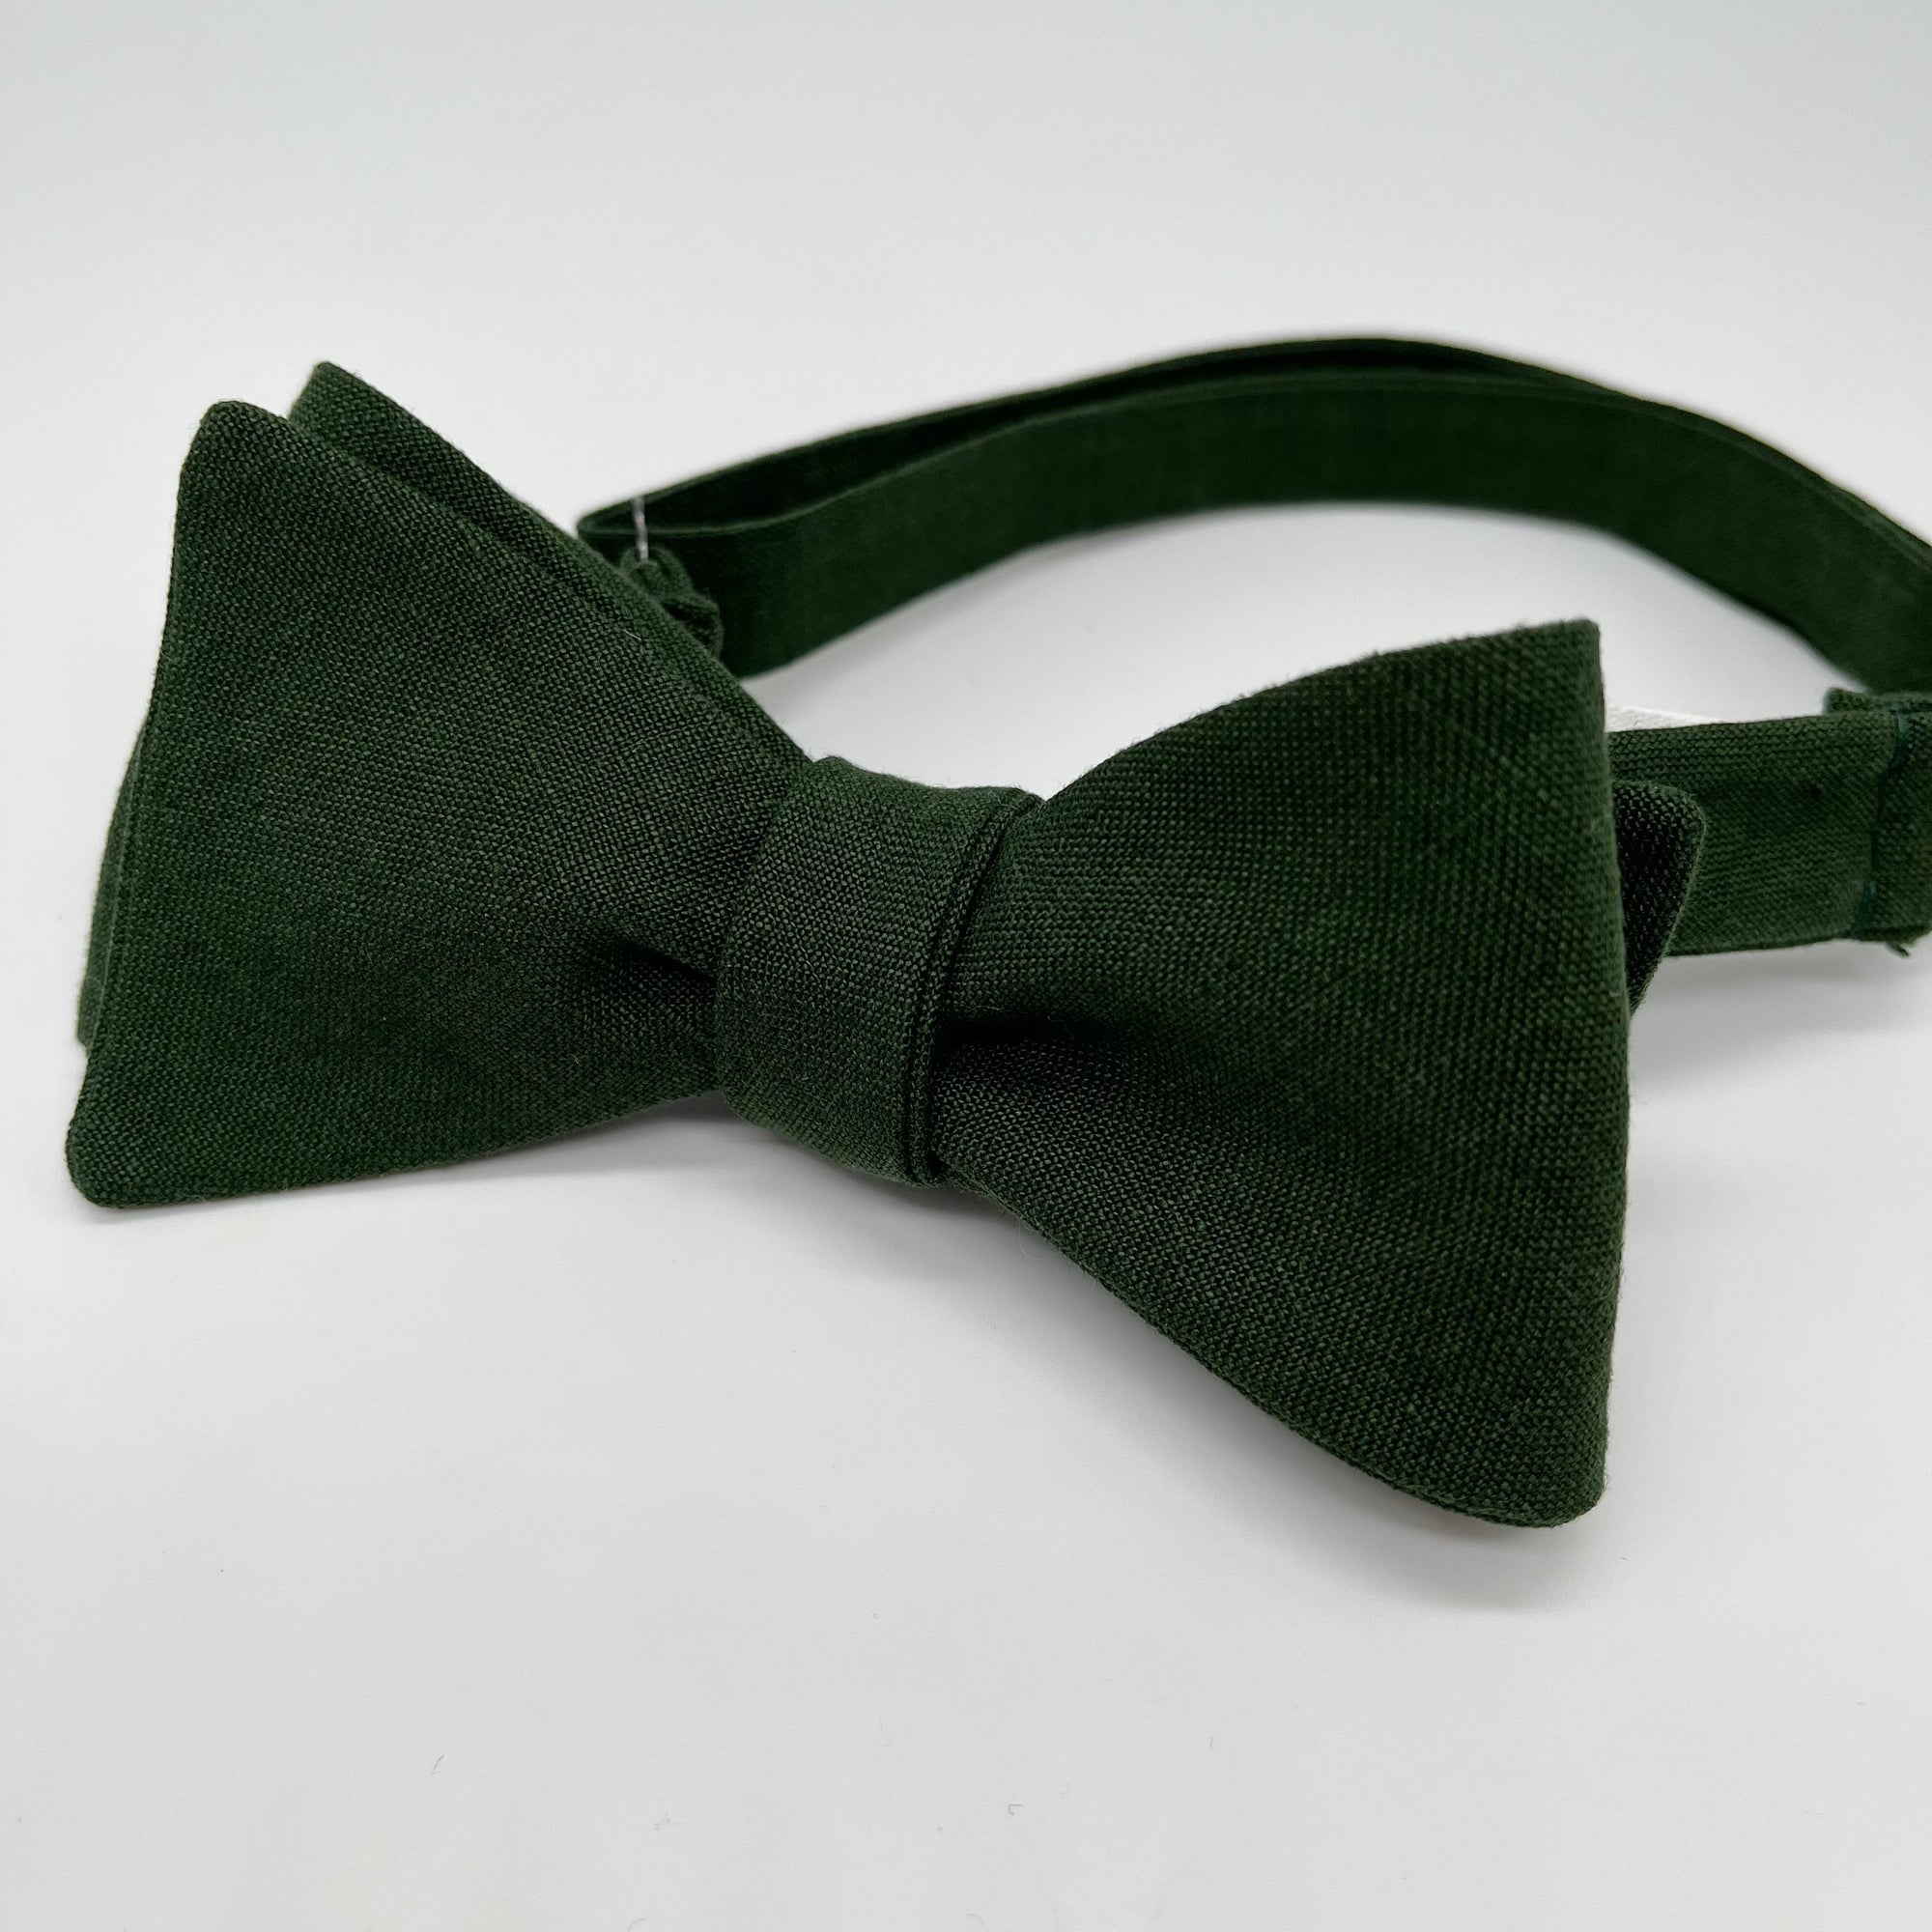 Self-Tie Bow Tie in Brunswick Green Irish Linen